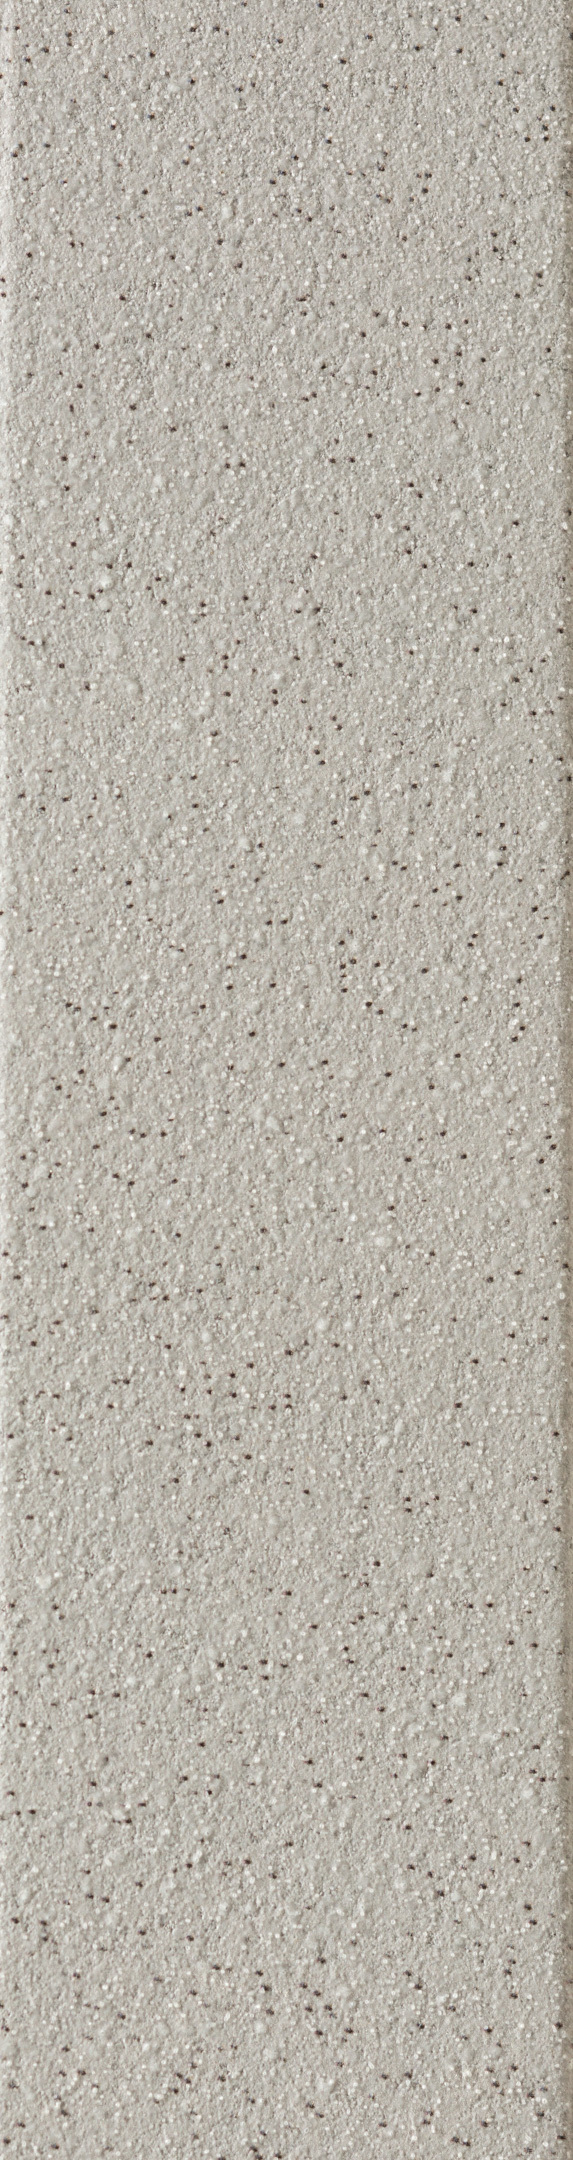 Клинкерная плитка Керамин Мичиган 7 белая 245х65х7 мм (34 шт.=0,54 кв.м) клинкерная плитка мичиган 7 белый 24 5х6 5 керамин